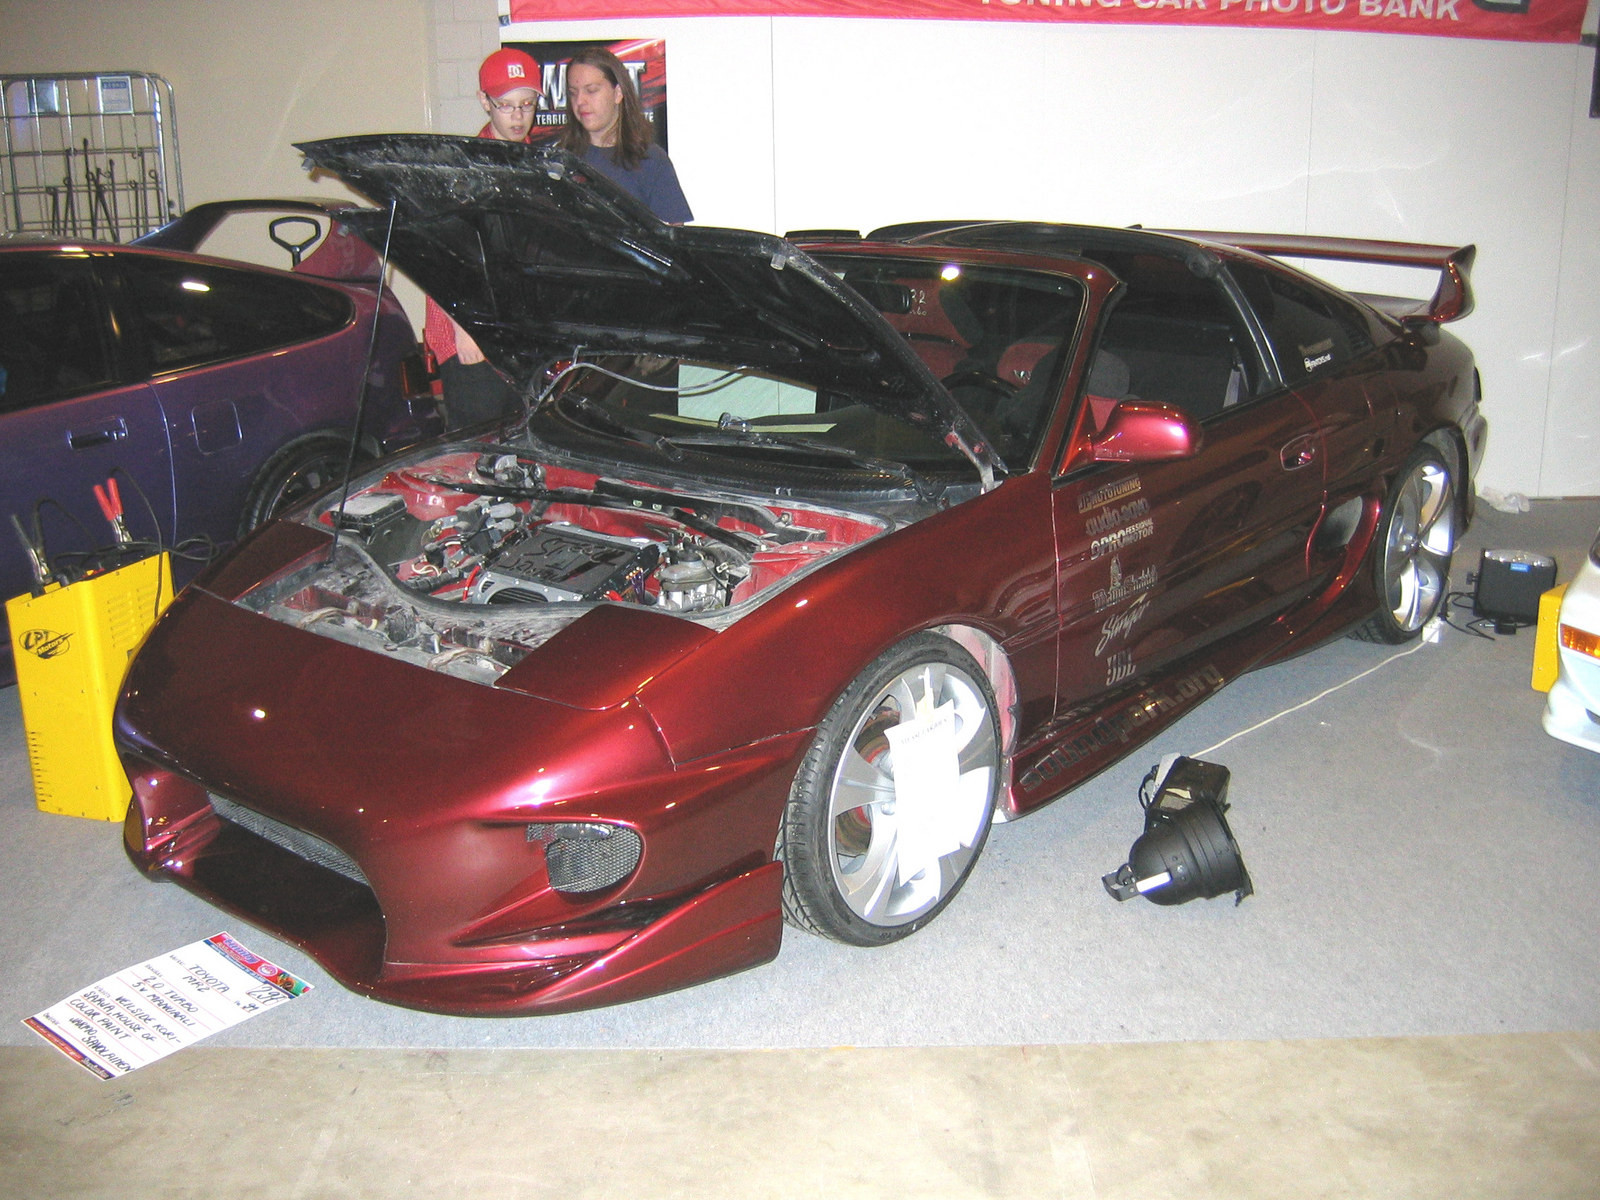 American Car Show 2005, turbo MR2